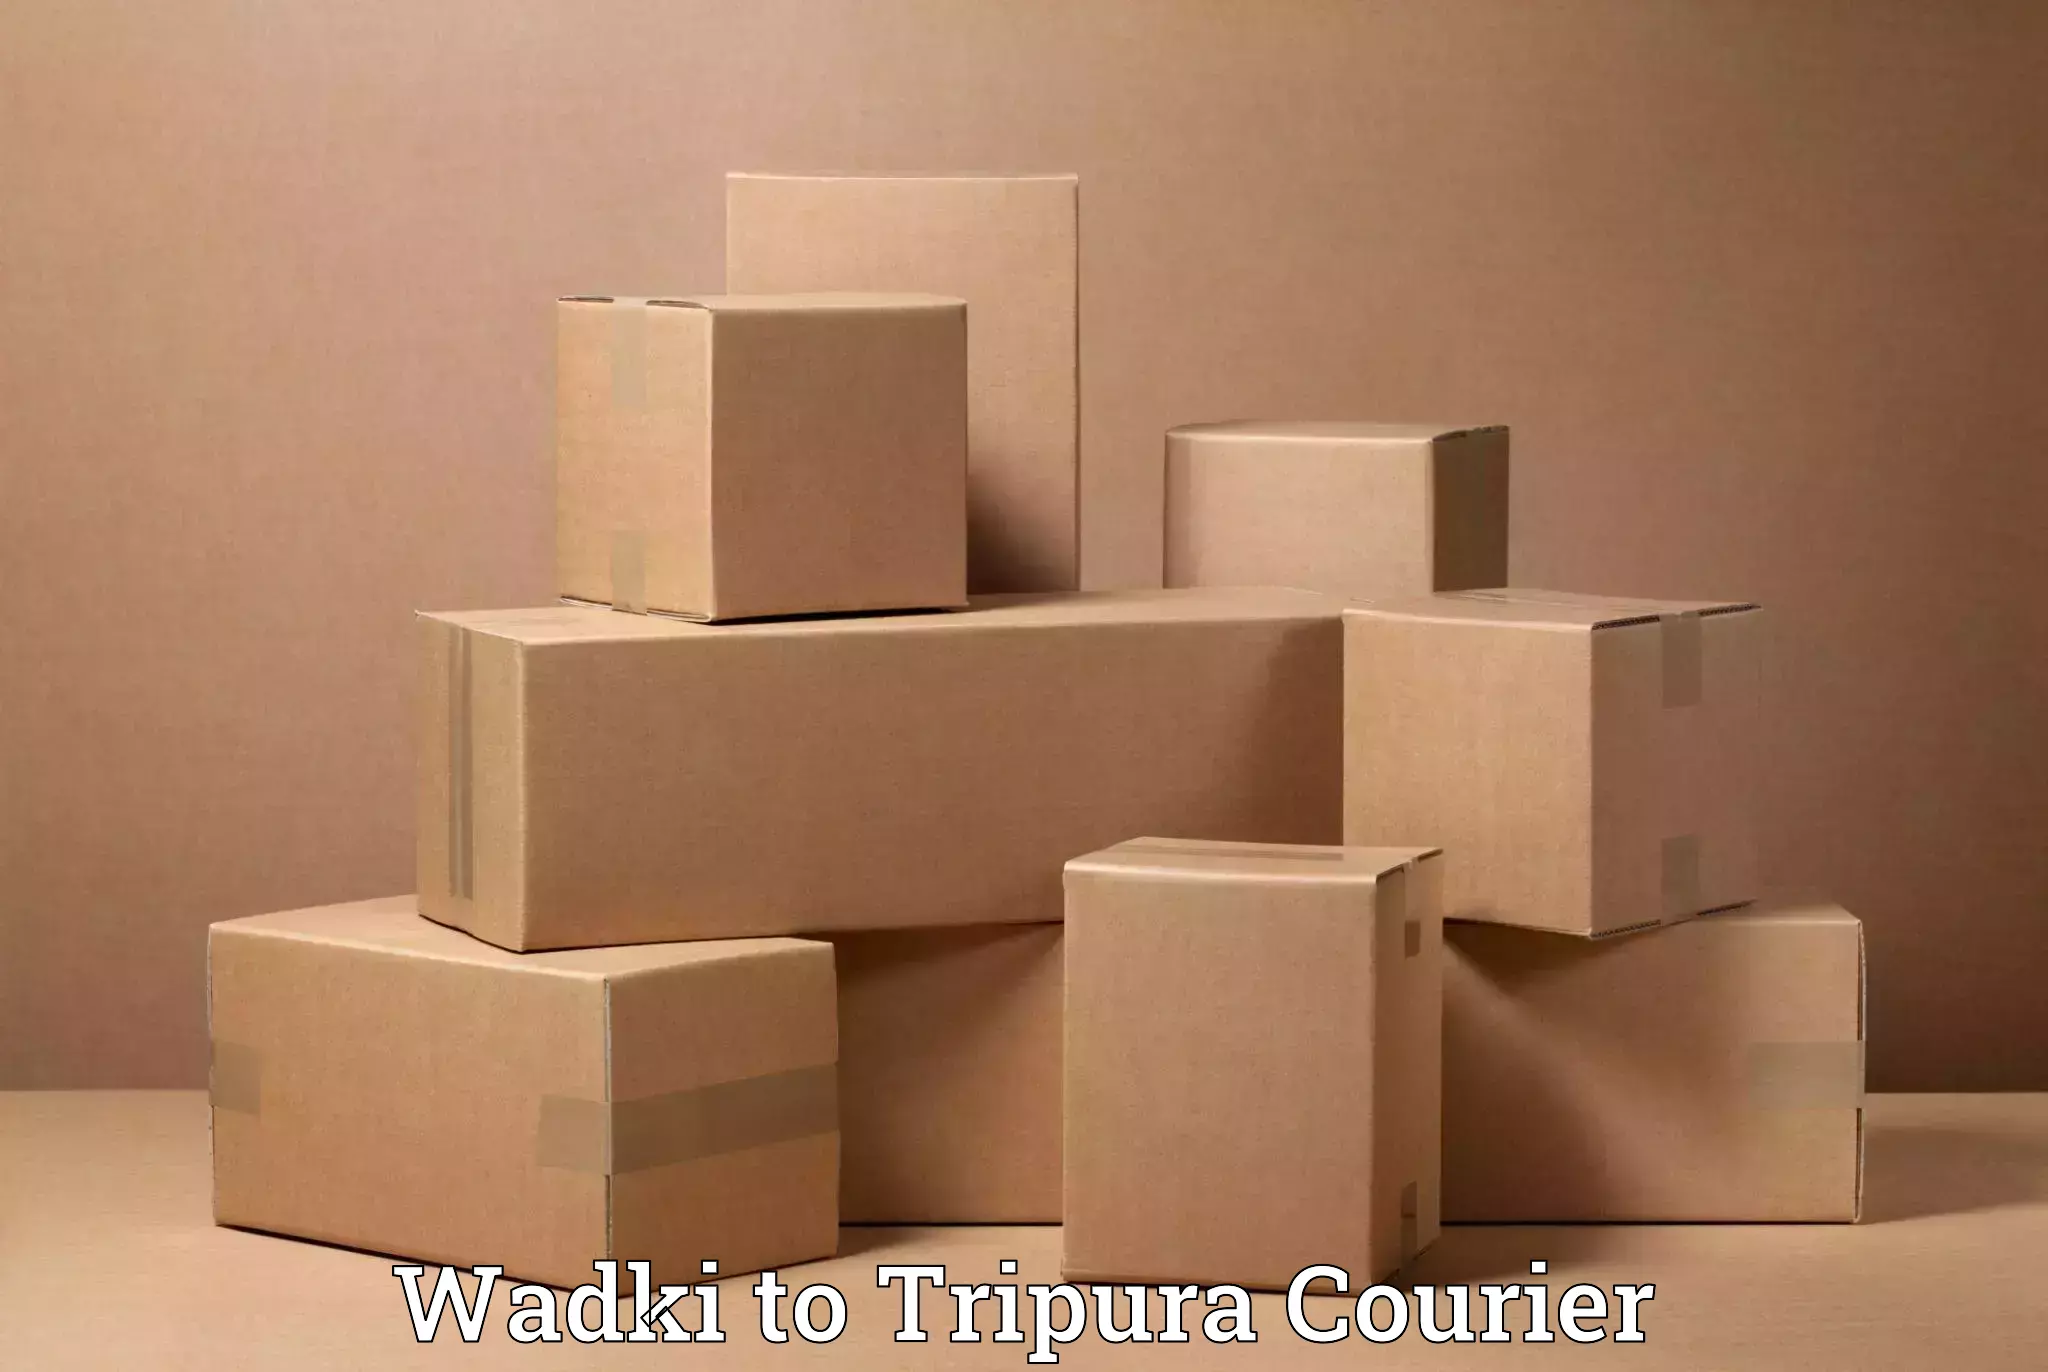 Professional packing and transport Wadki to Tripura